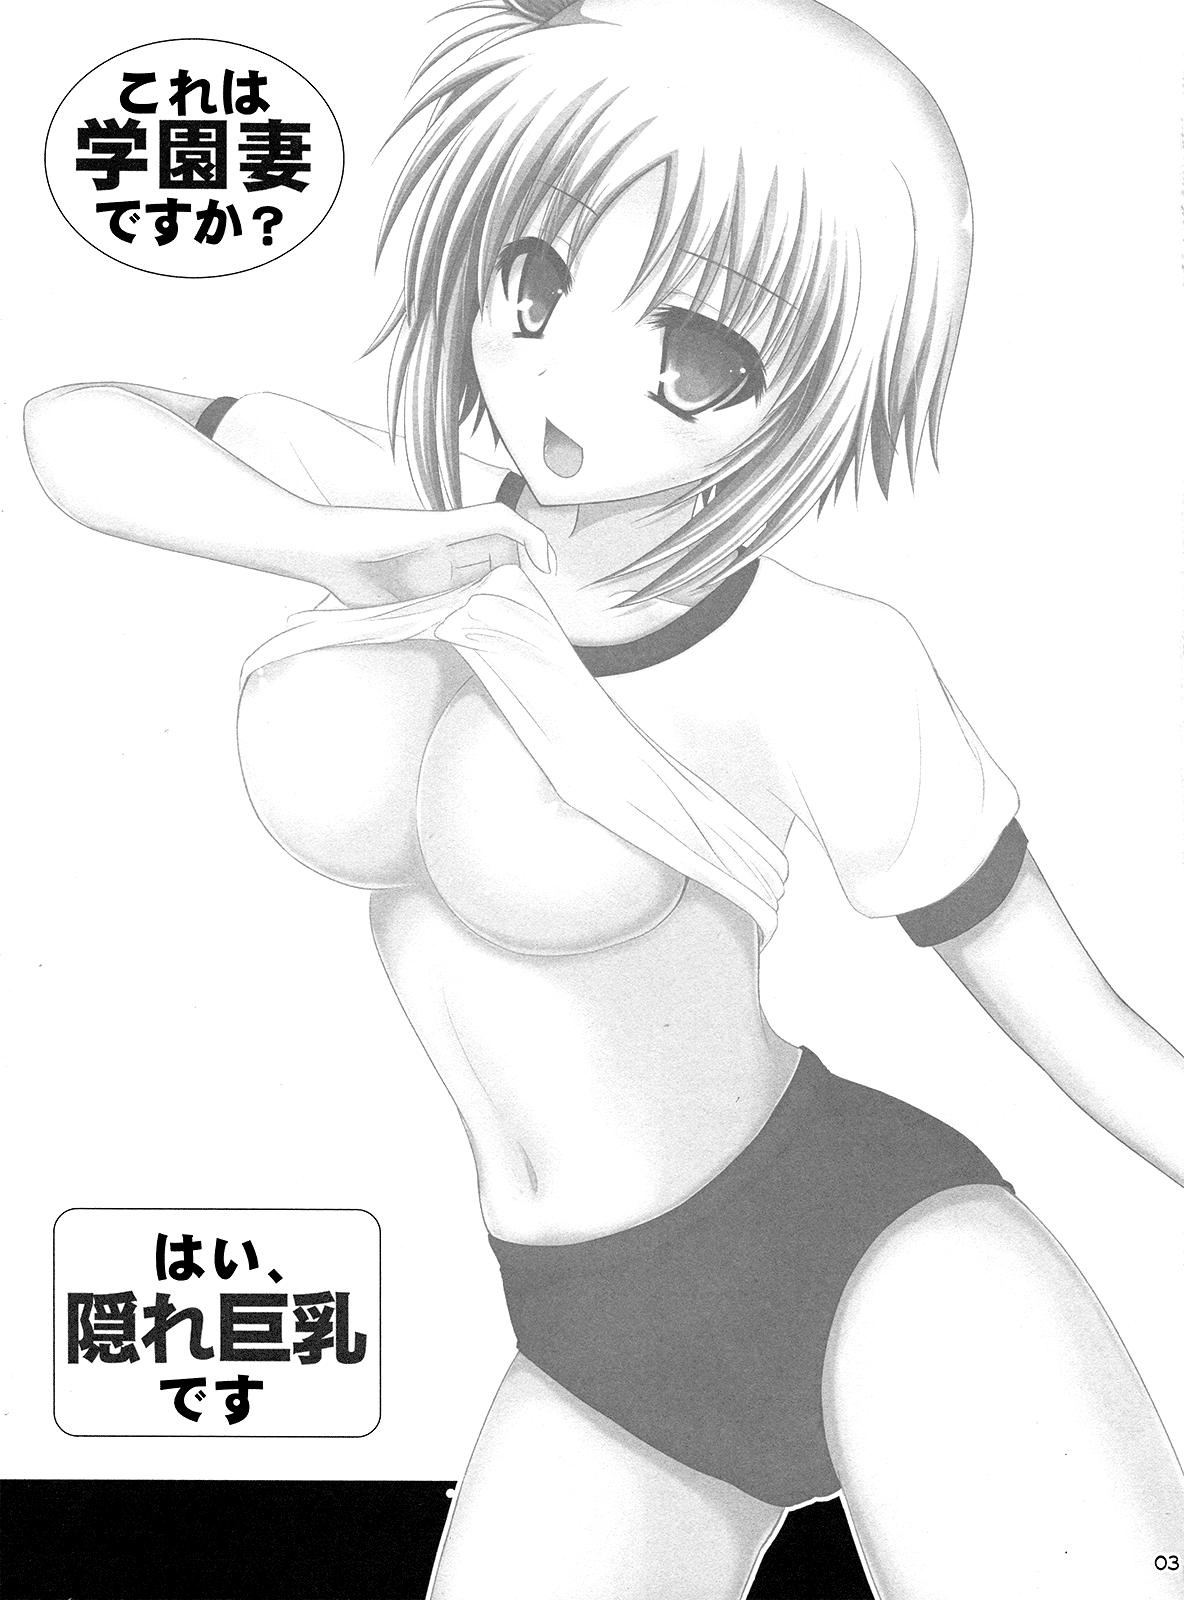 Self Is This A School Wife? Yes, She Secretly Has Big Breasts - Kore wa zombie desu ka Hardcore Rough Sex - Page 2